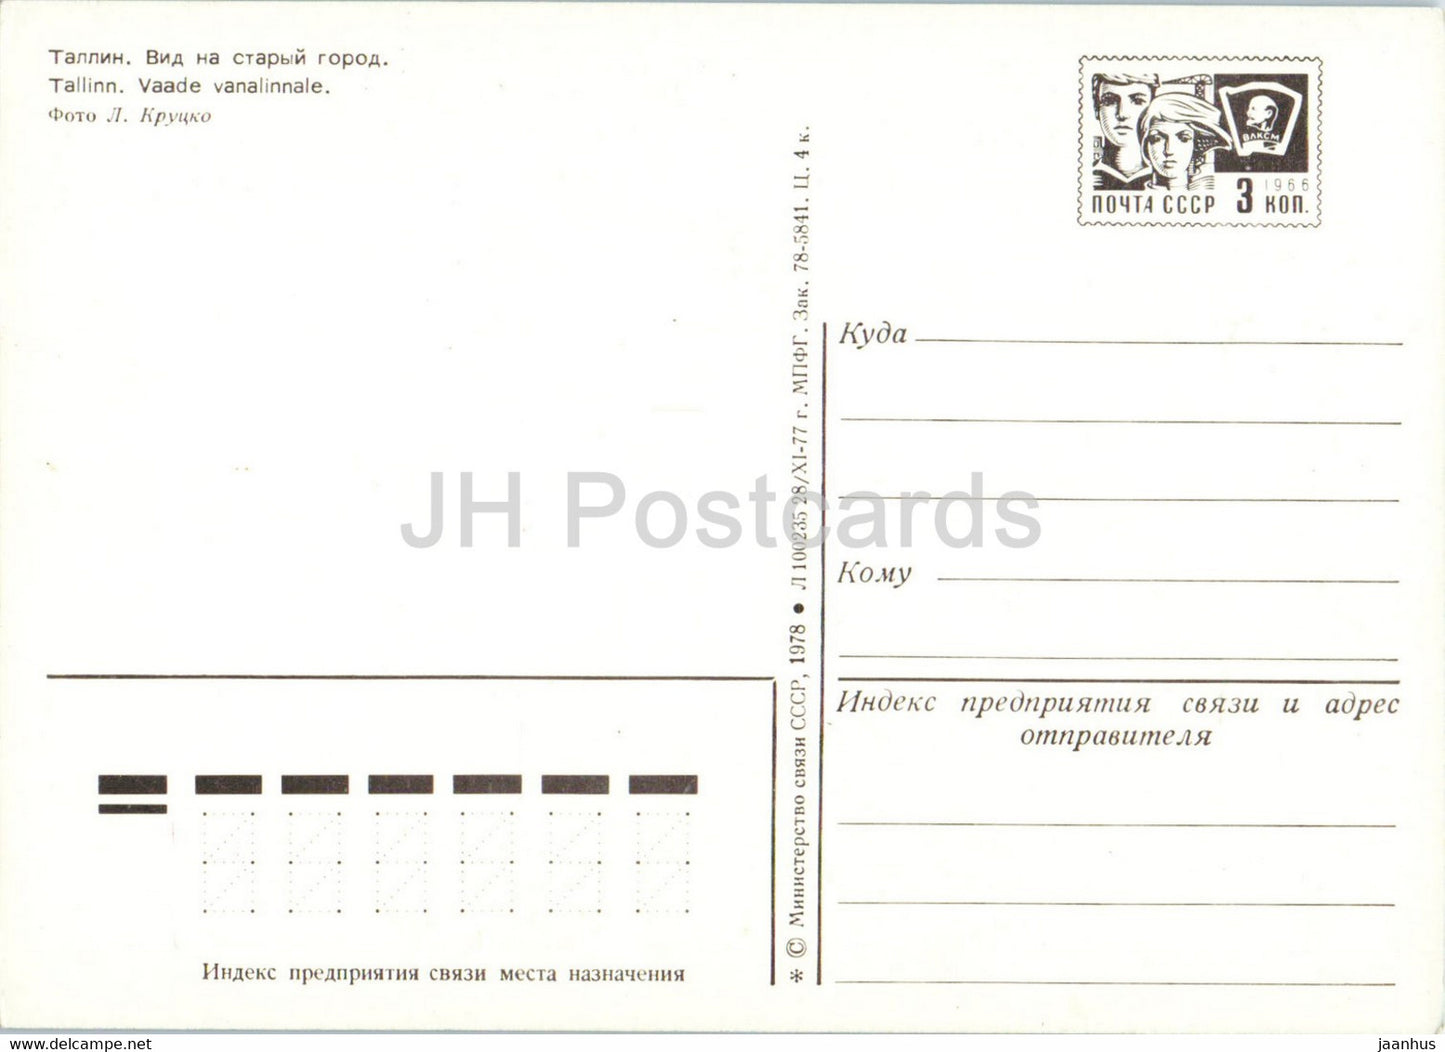 Tallinn - Old Town view - postal stationery - 1977 - Estonia USSR - unused